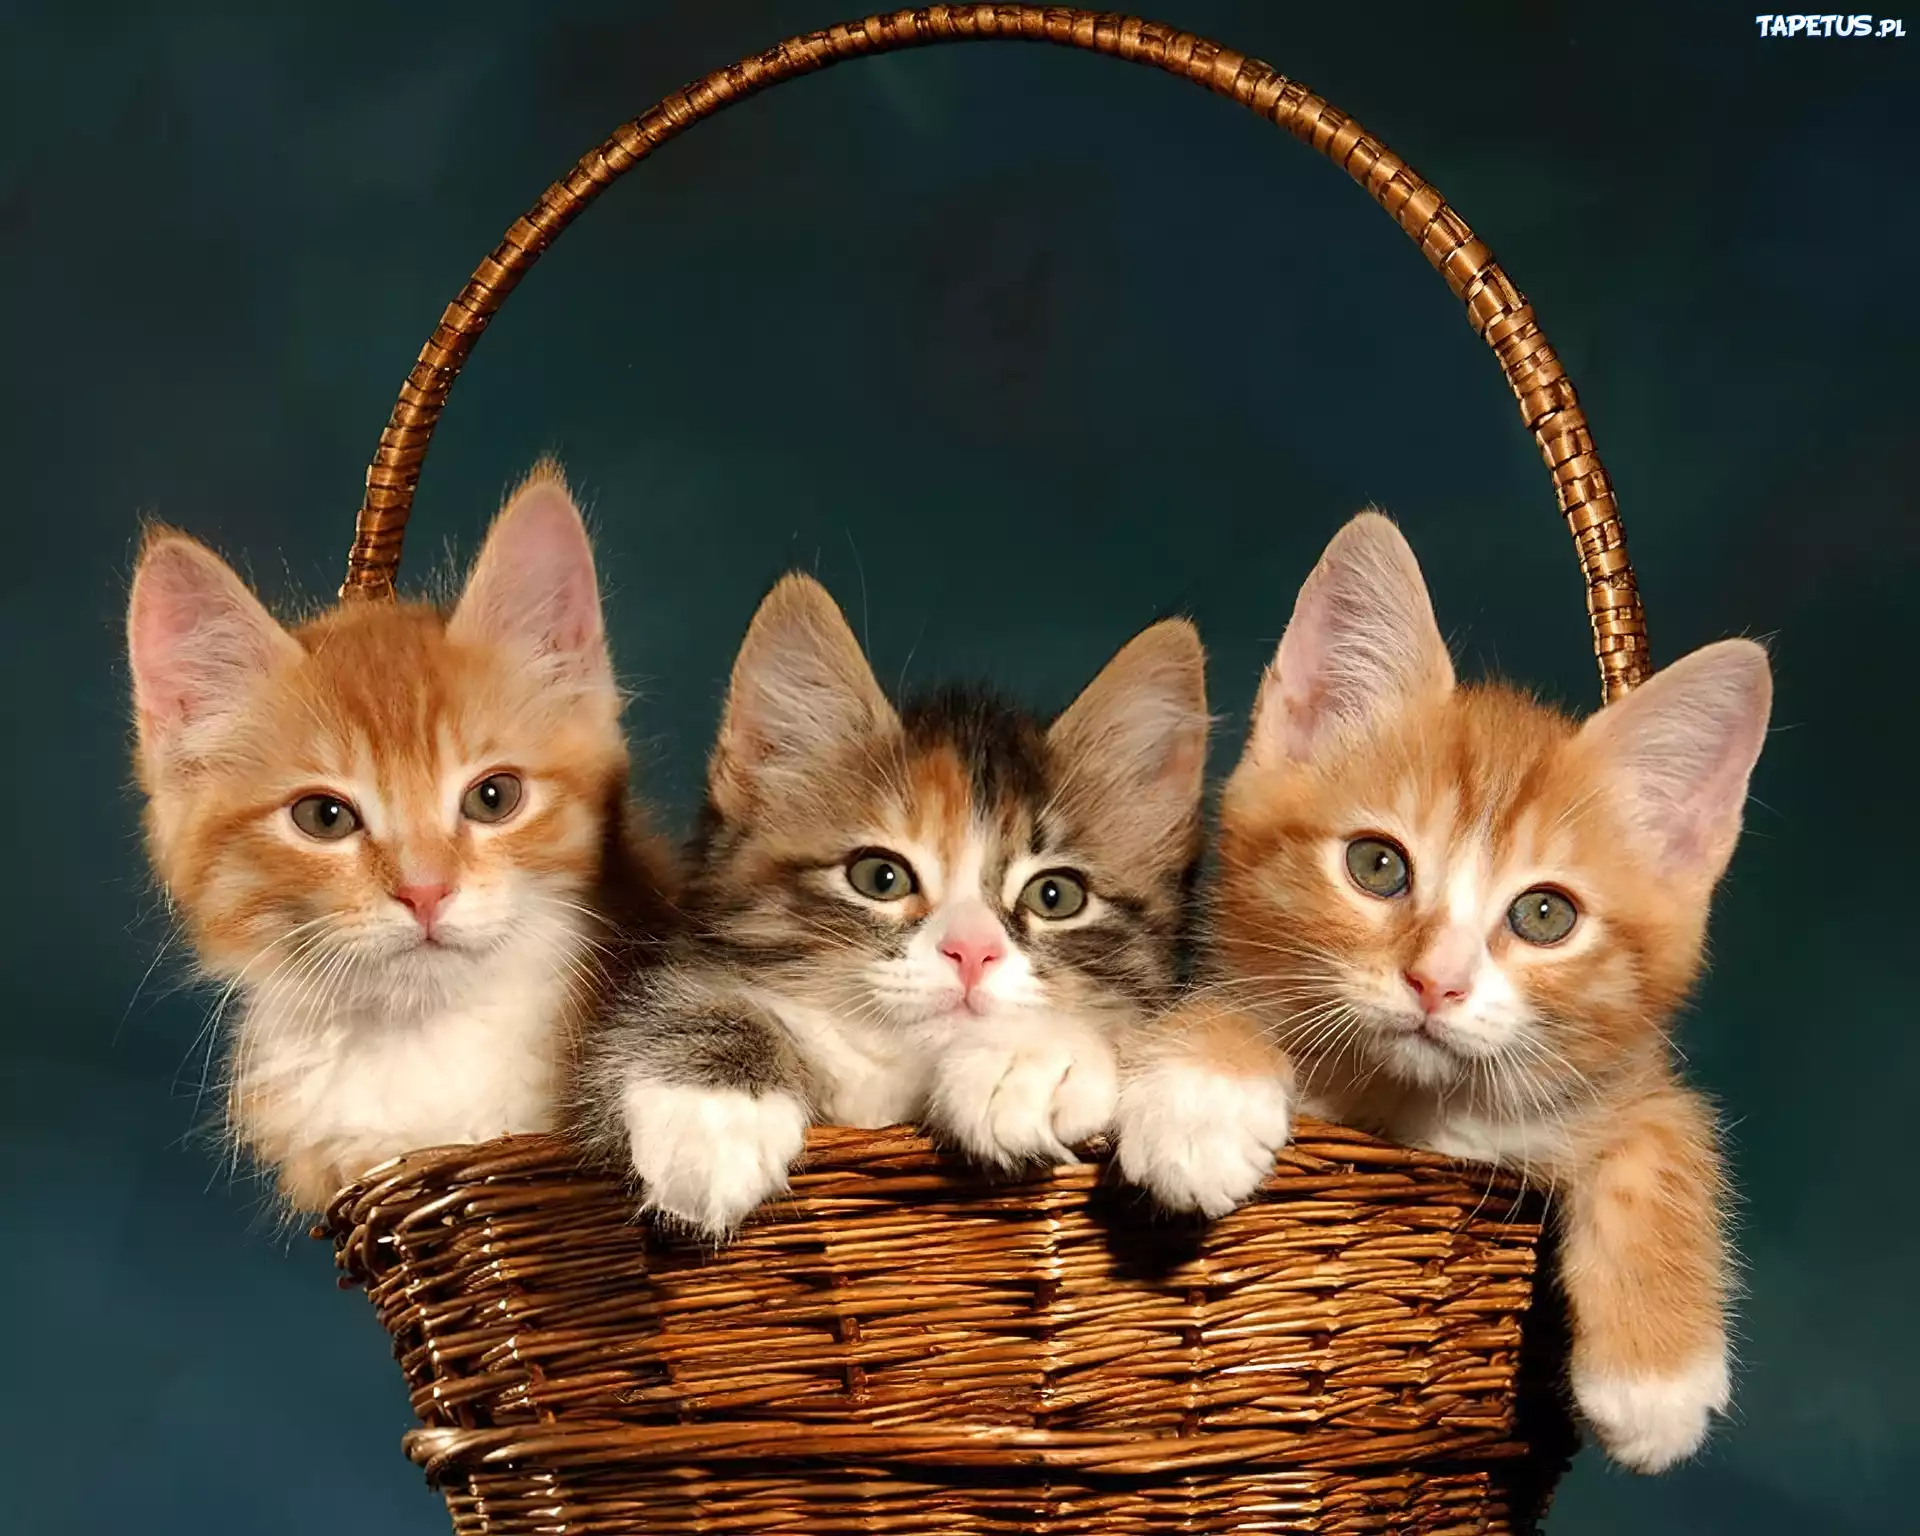 Котята звуко. Котики в корзинке. Кошка в лукошке. Кошка с котятами в лукошке. Котята в лукошке.